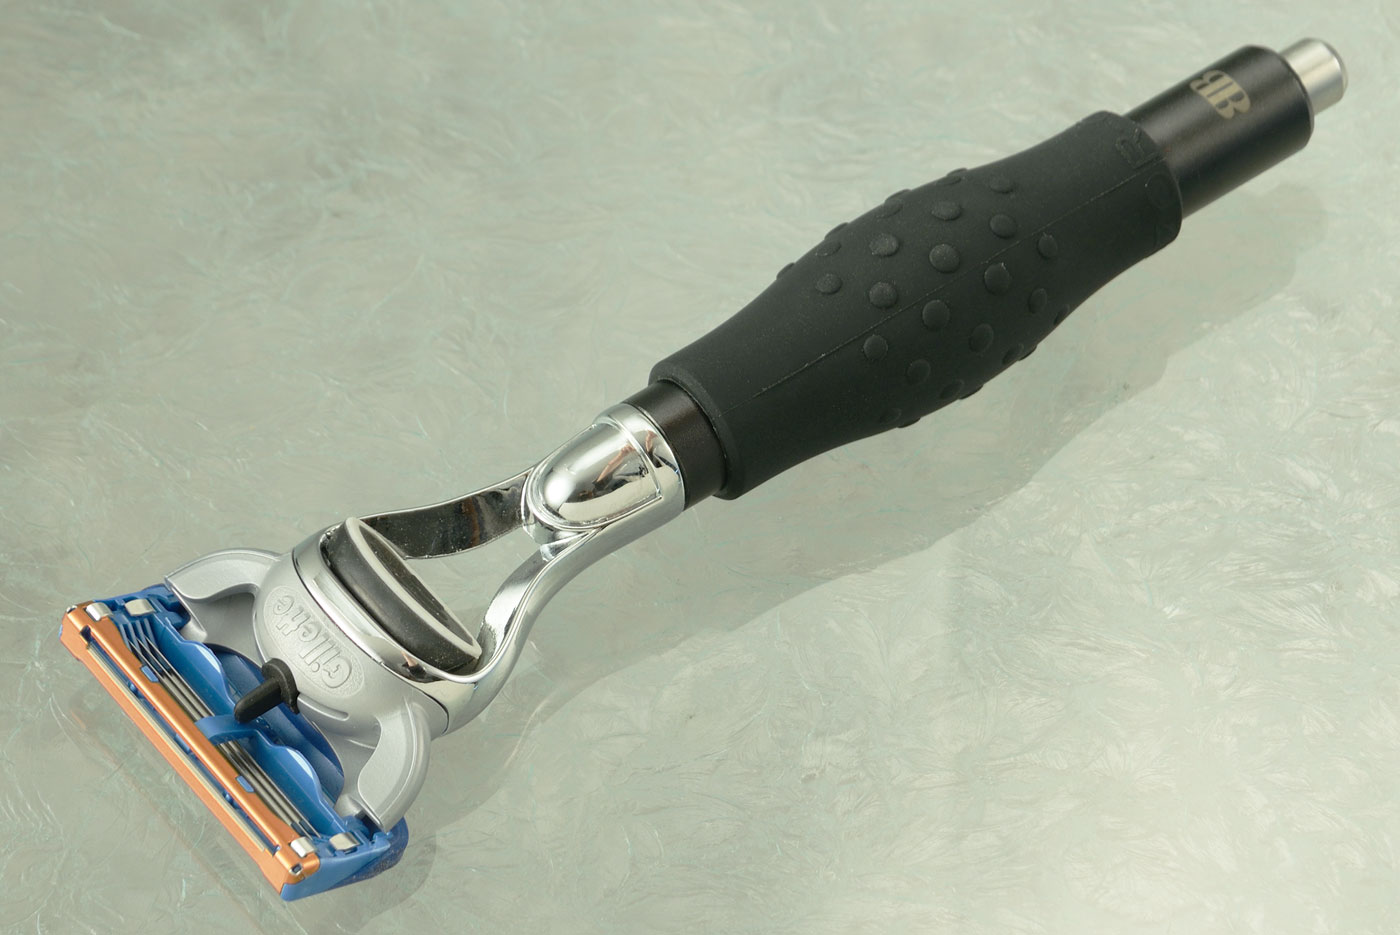 Razor-Grip Gillete Fusion5 Safety Razor - Black Aluminum with Rubber Razor-Grip